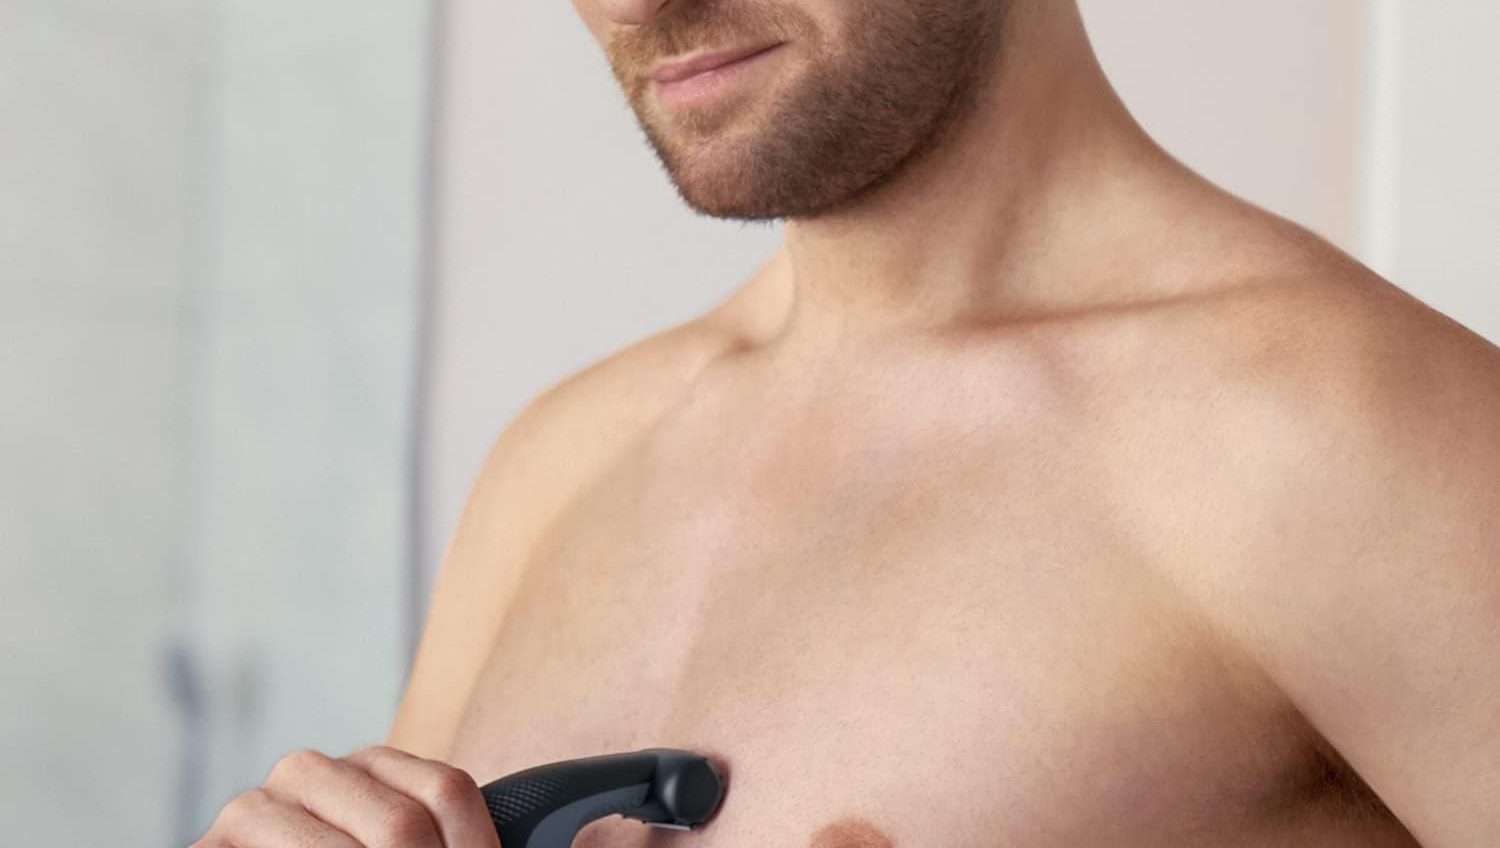 Philips Bodygroom 3000 in offerta a 29,99€: rasatura perfetta, senza irritazioni